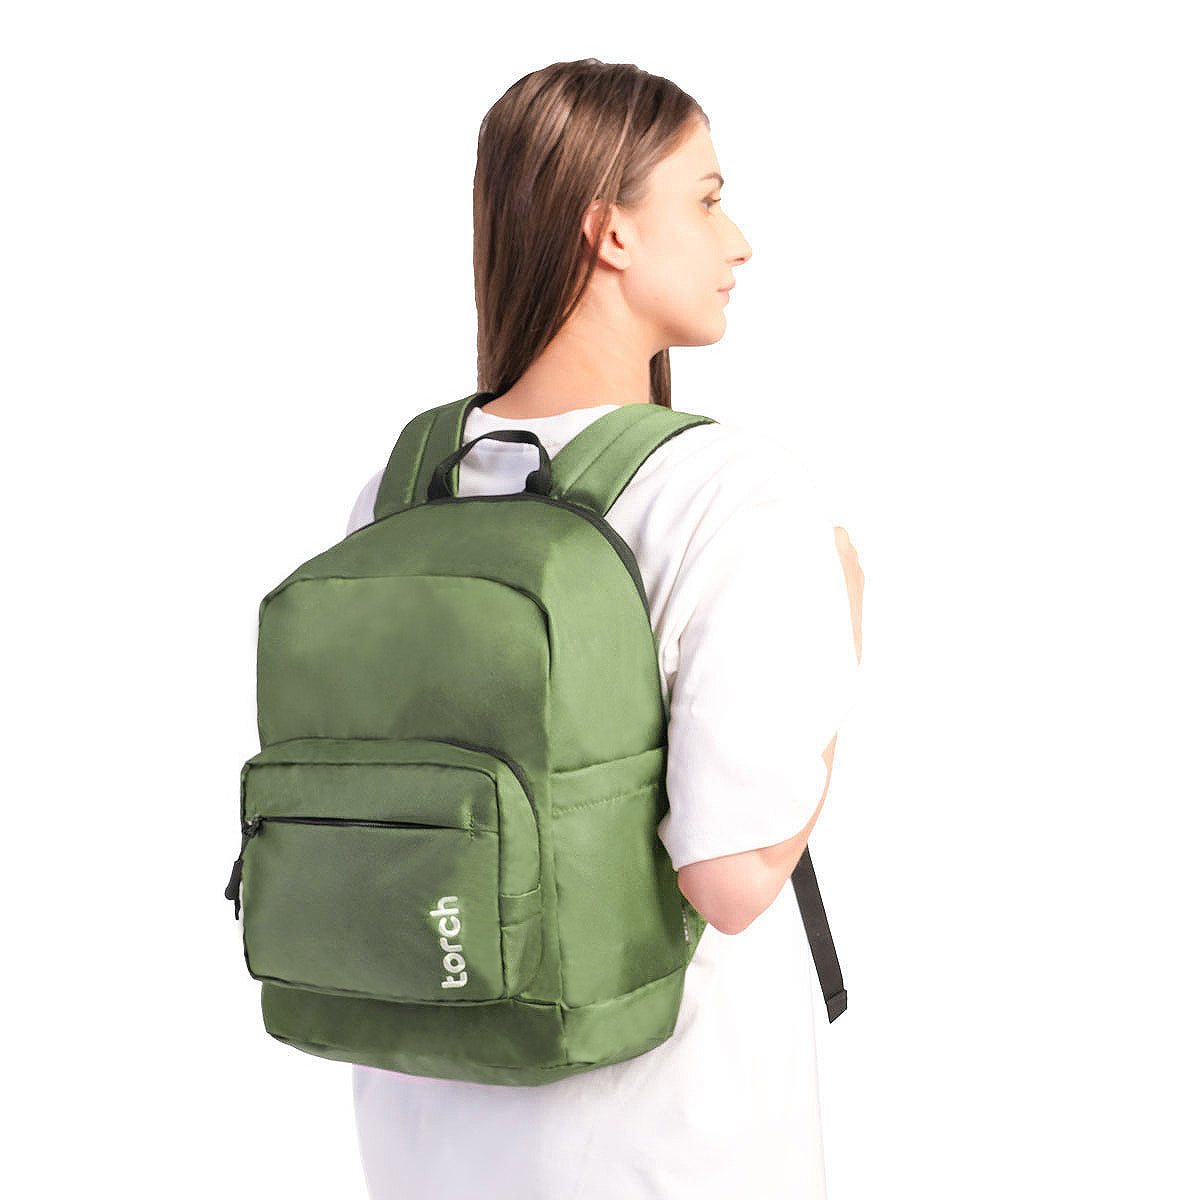 Samata Backpack